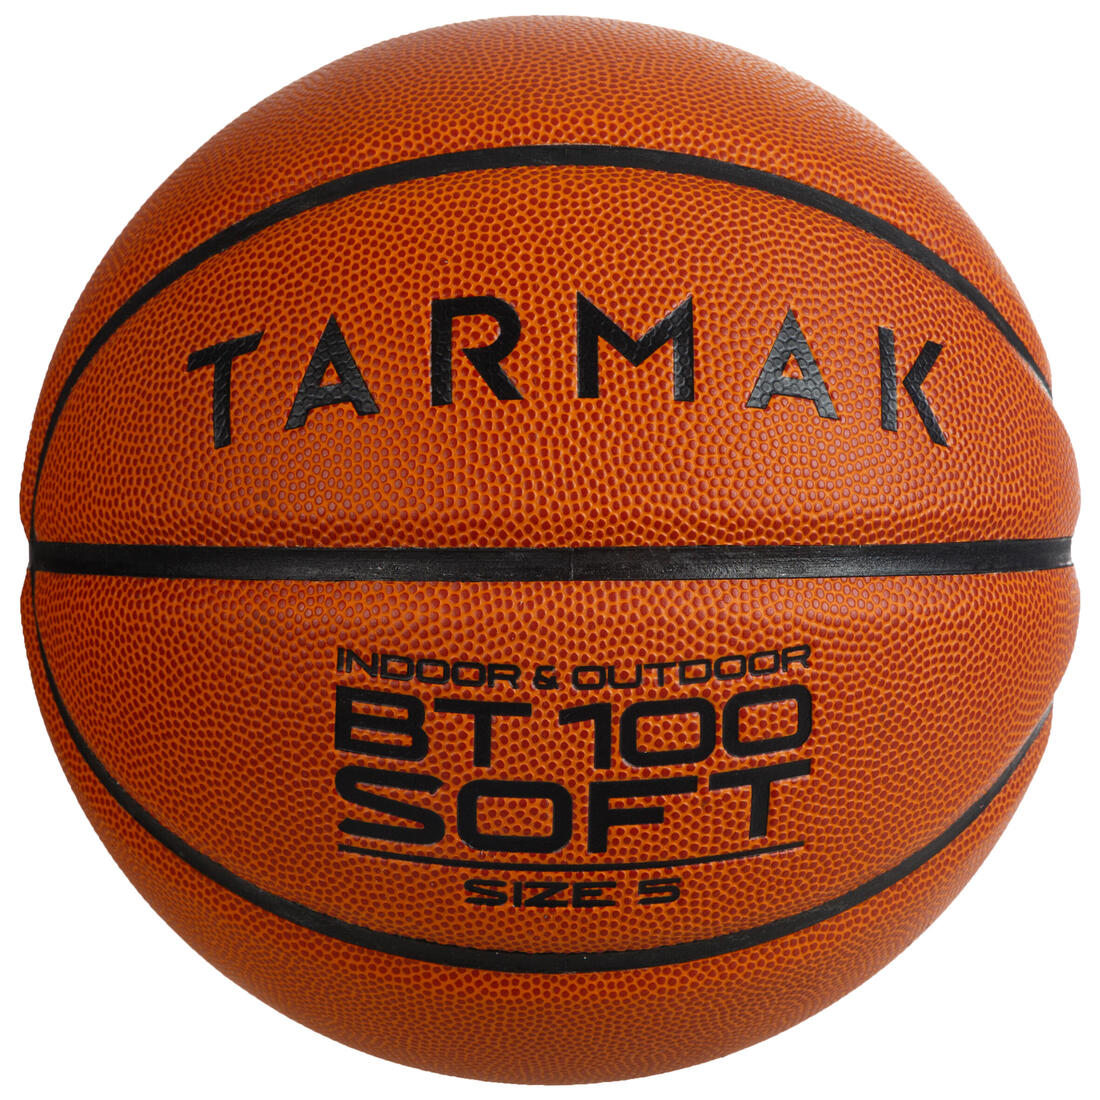 TARMAK(ターマック) バスケットボール 初心者向 5号球 BT100 キッズ (10歳以下用)